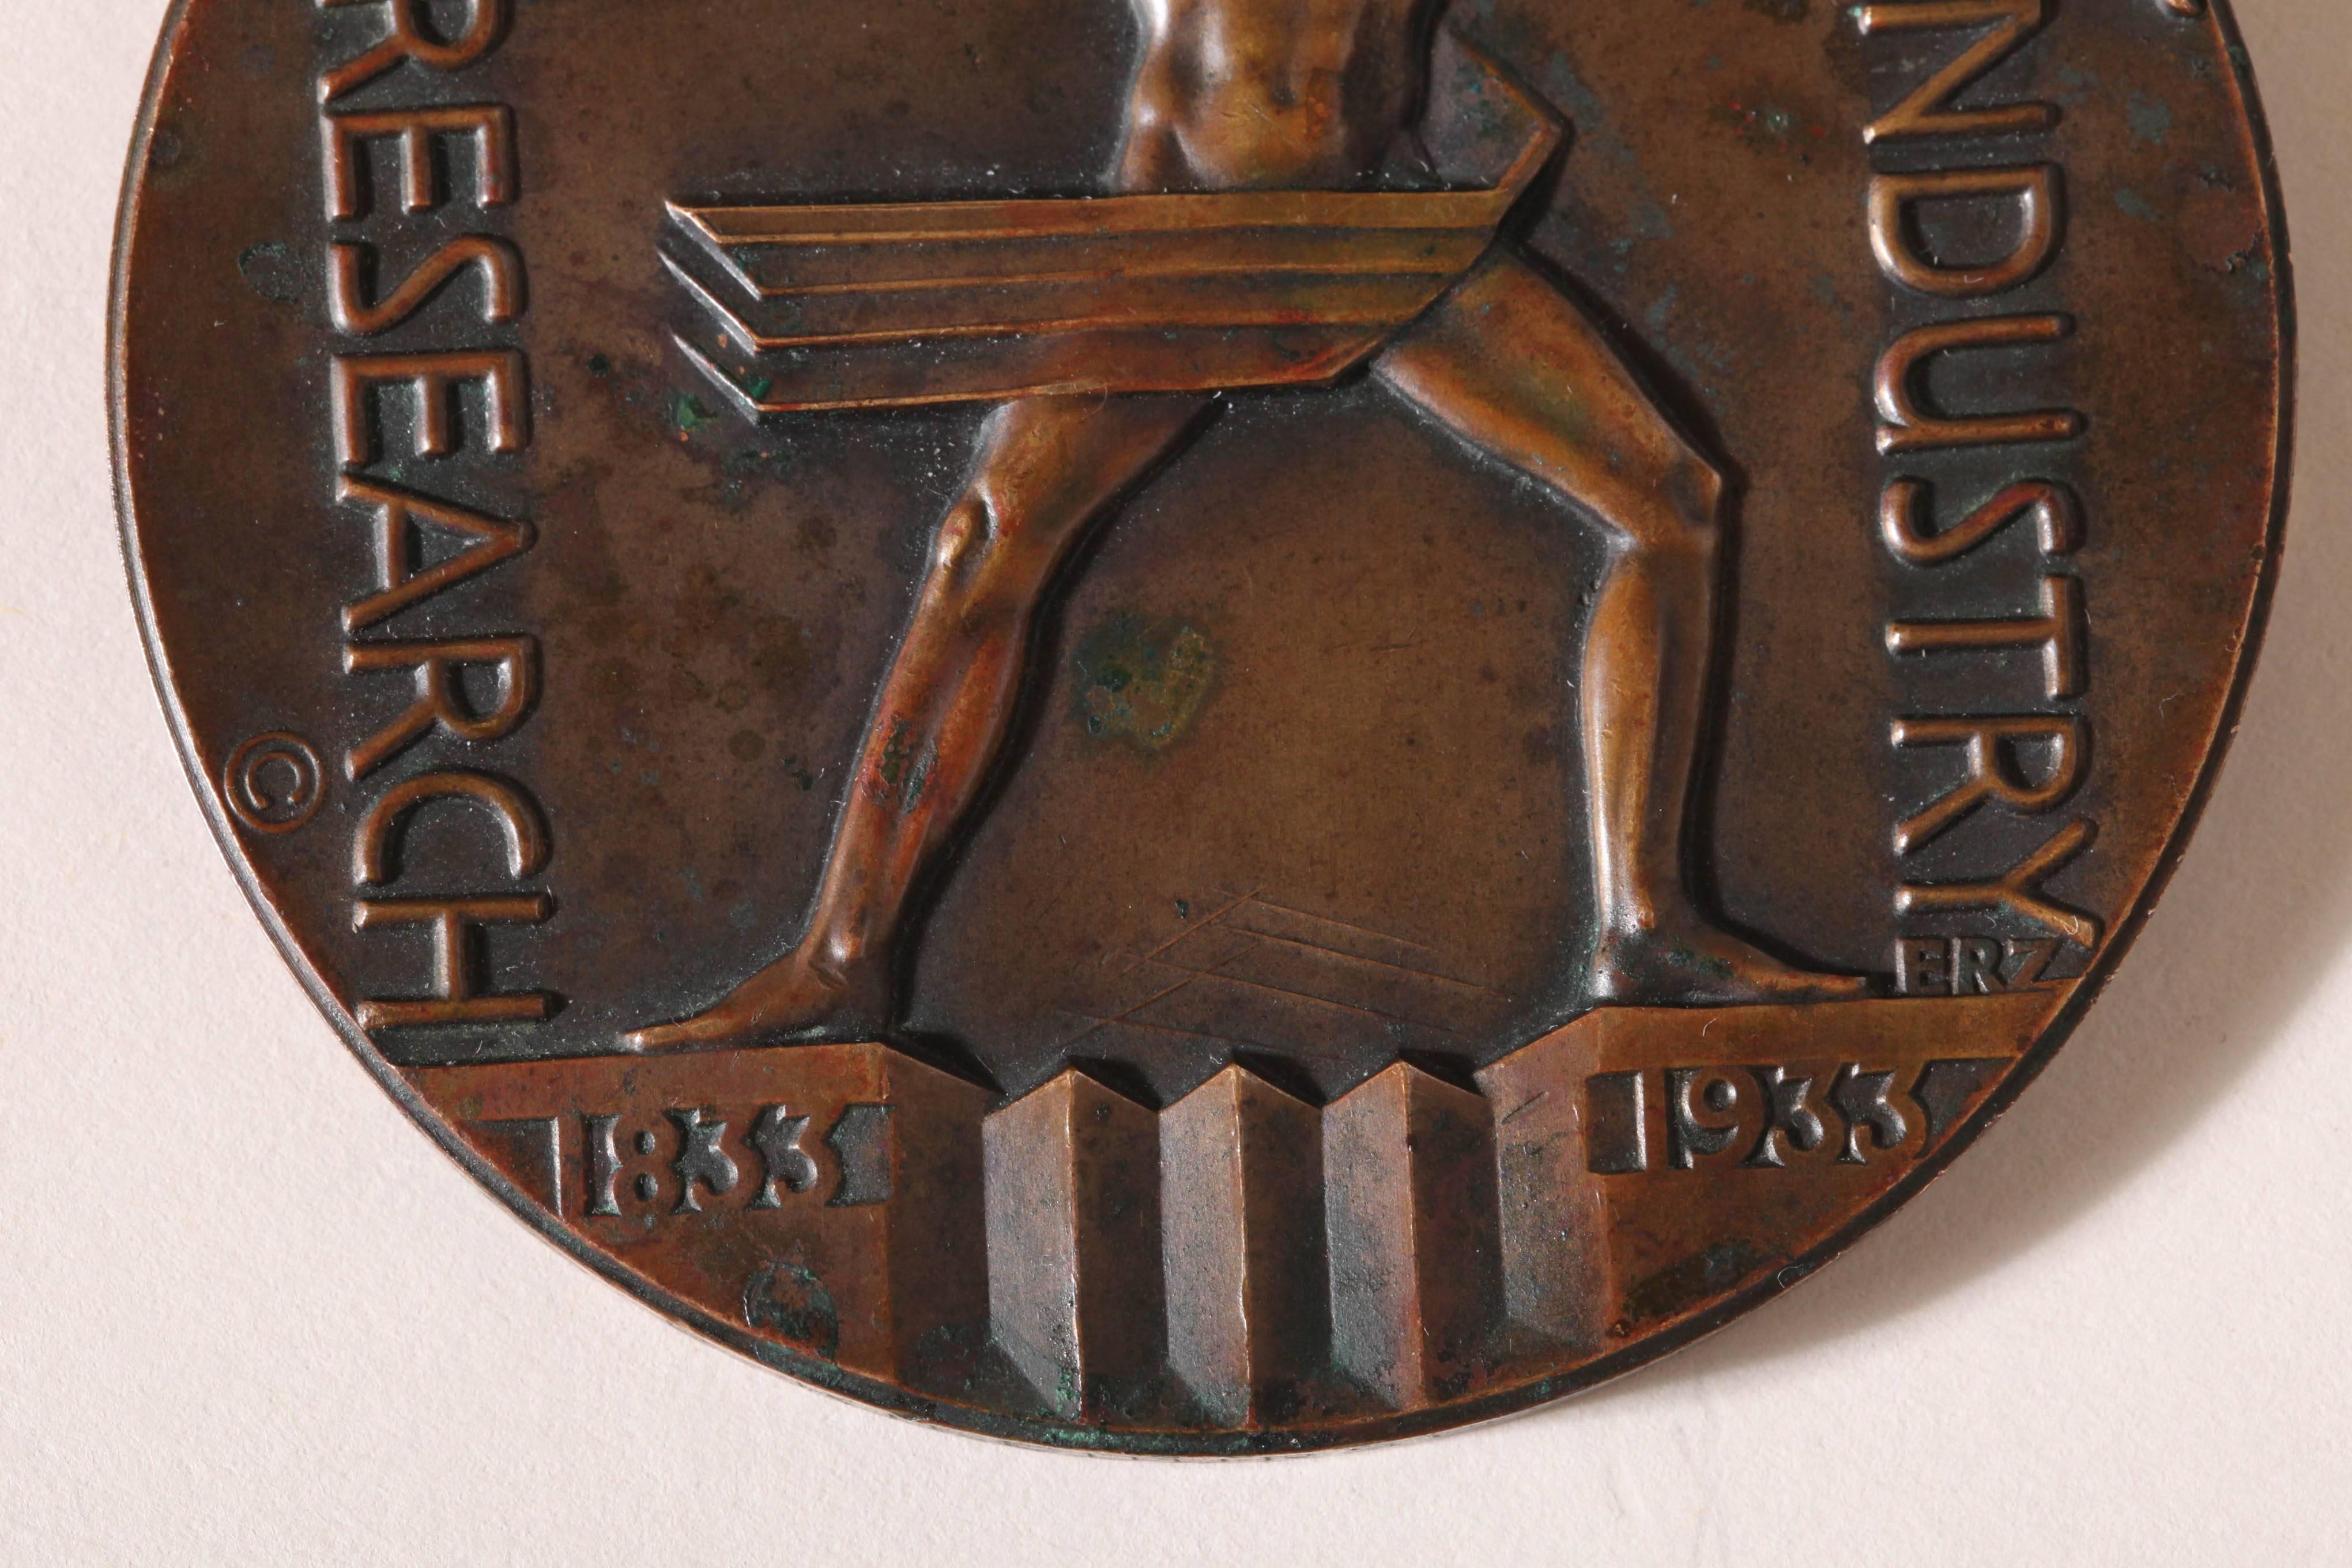 American Art Deco Medal Commemorating Century of Progress International Expo 1